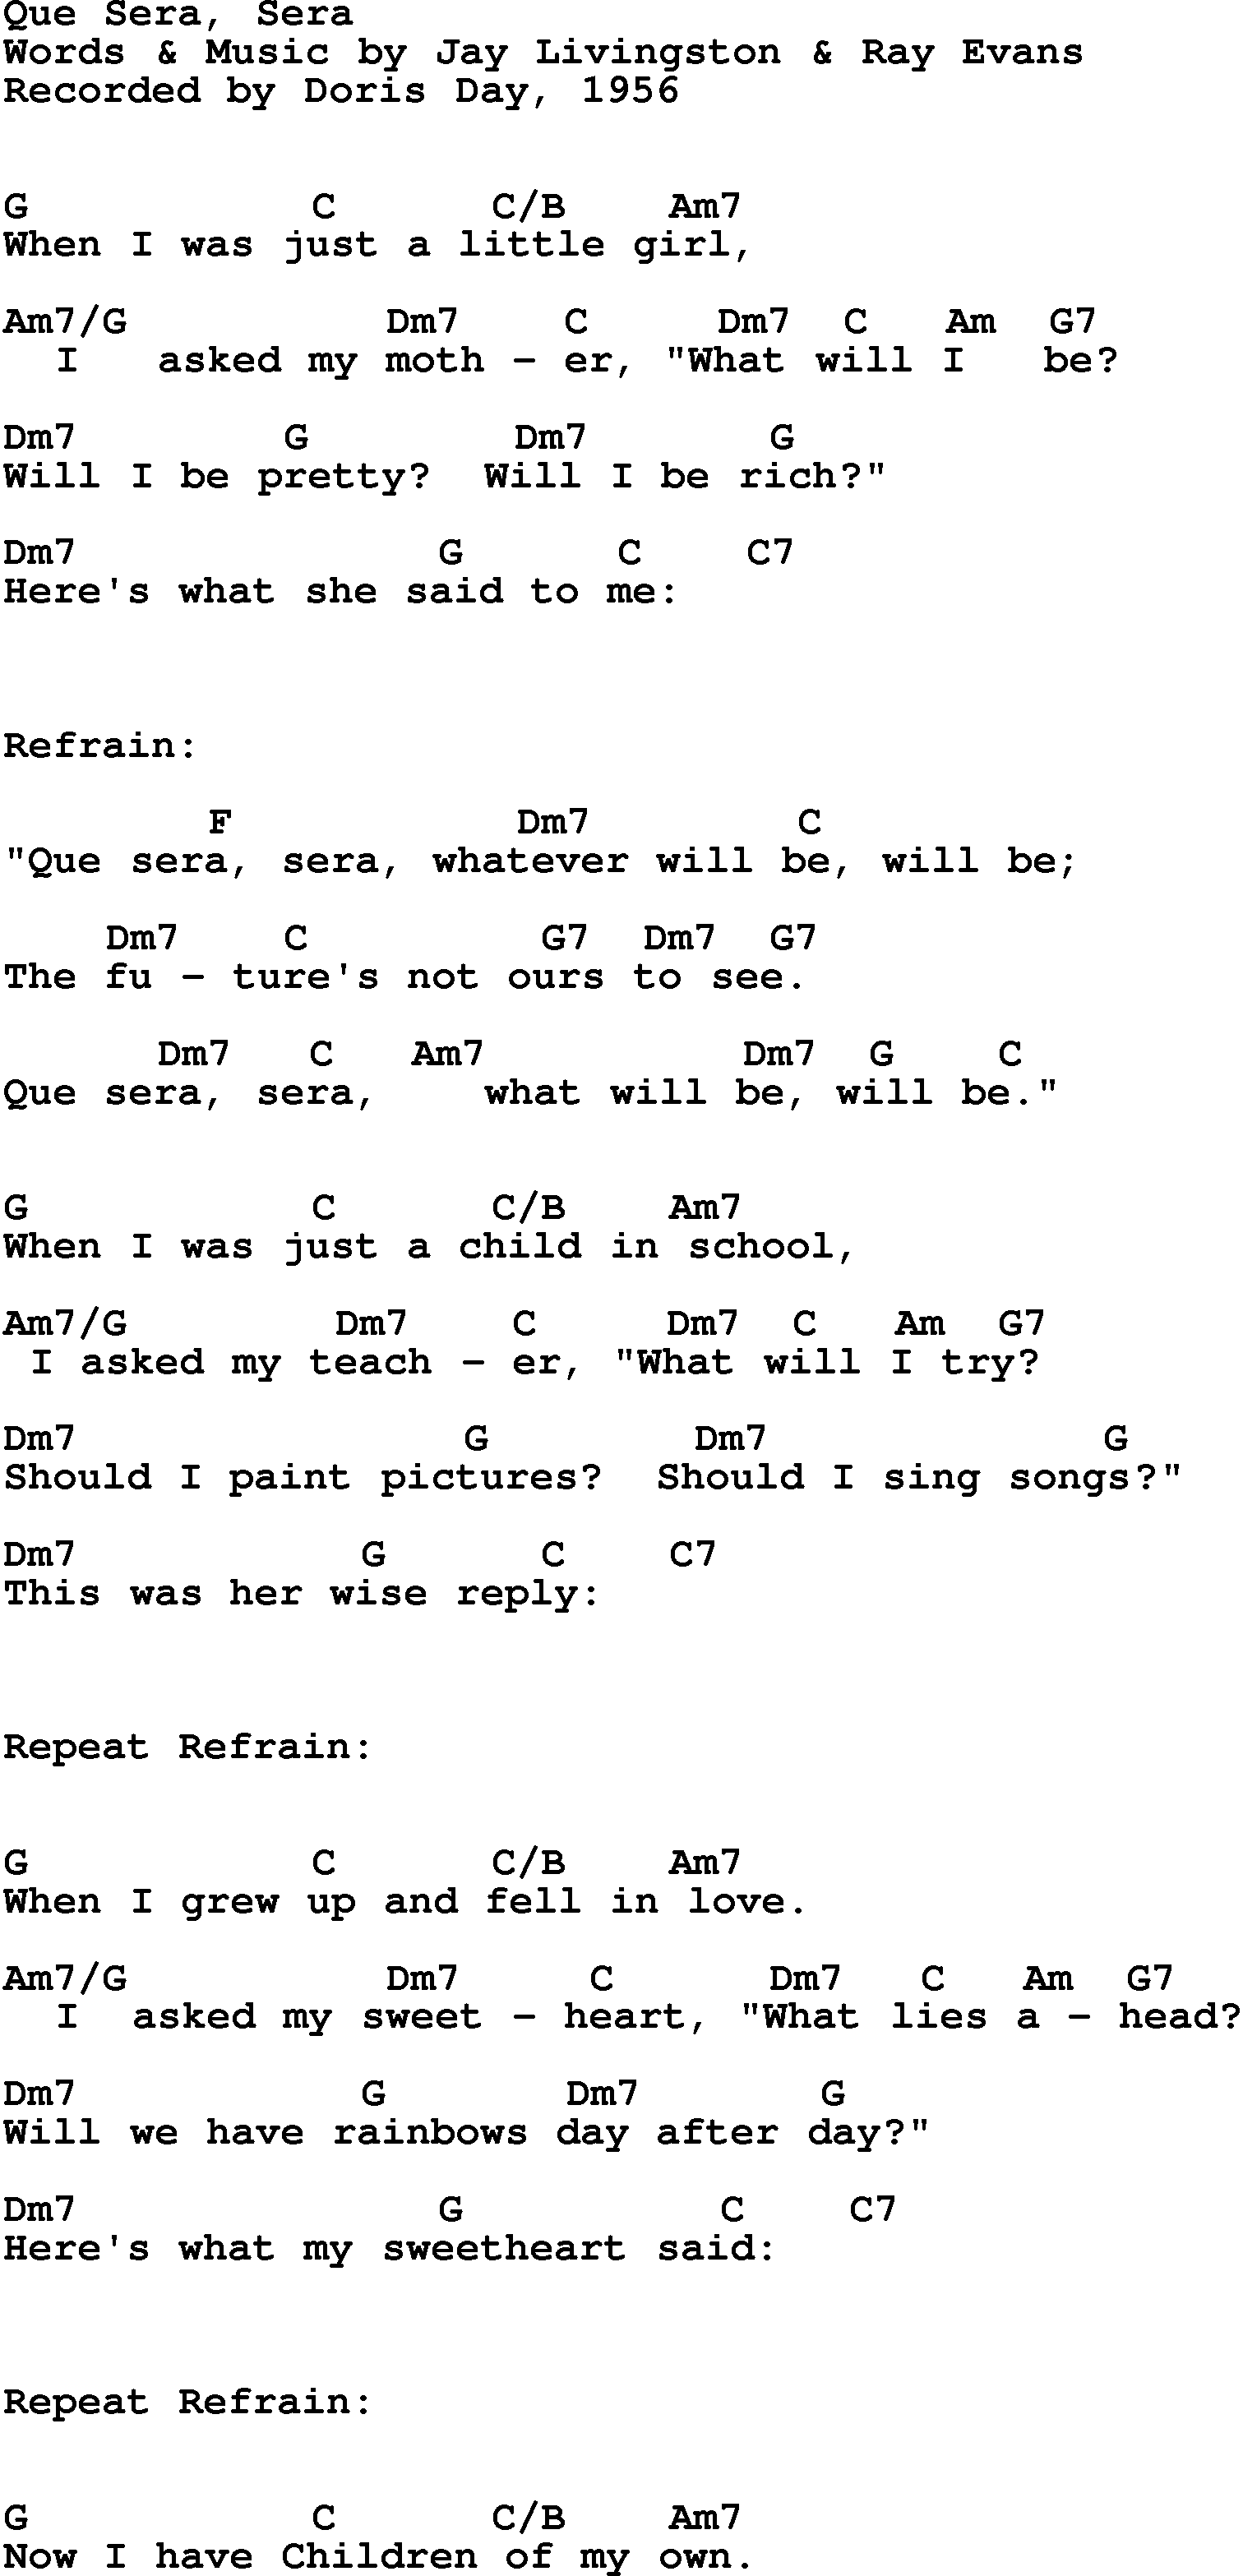 Song Lyrics with guitar chords for Que Sera Sera - Doris Day, 1956